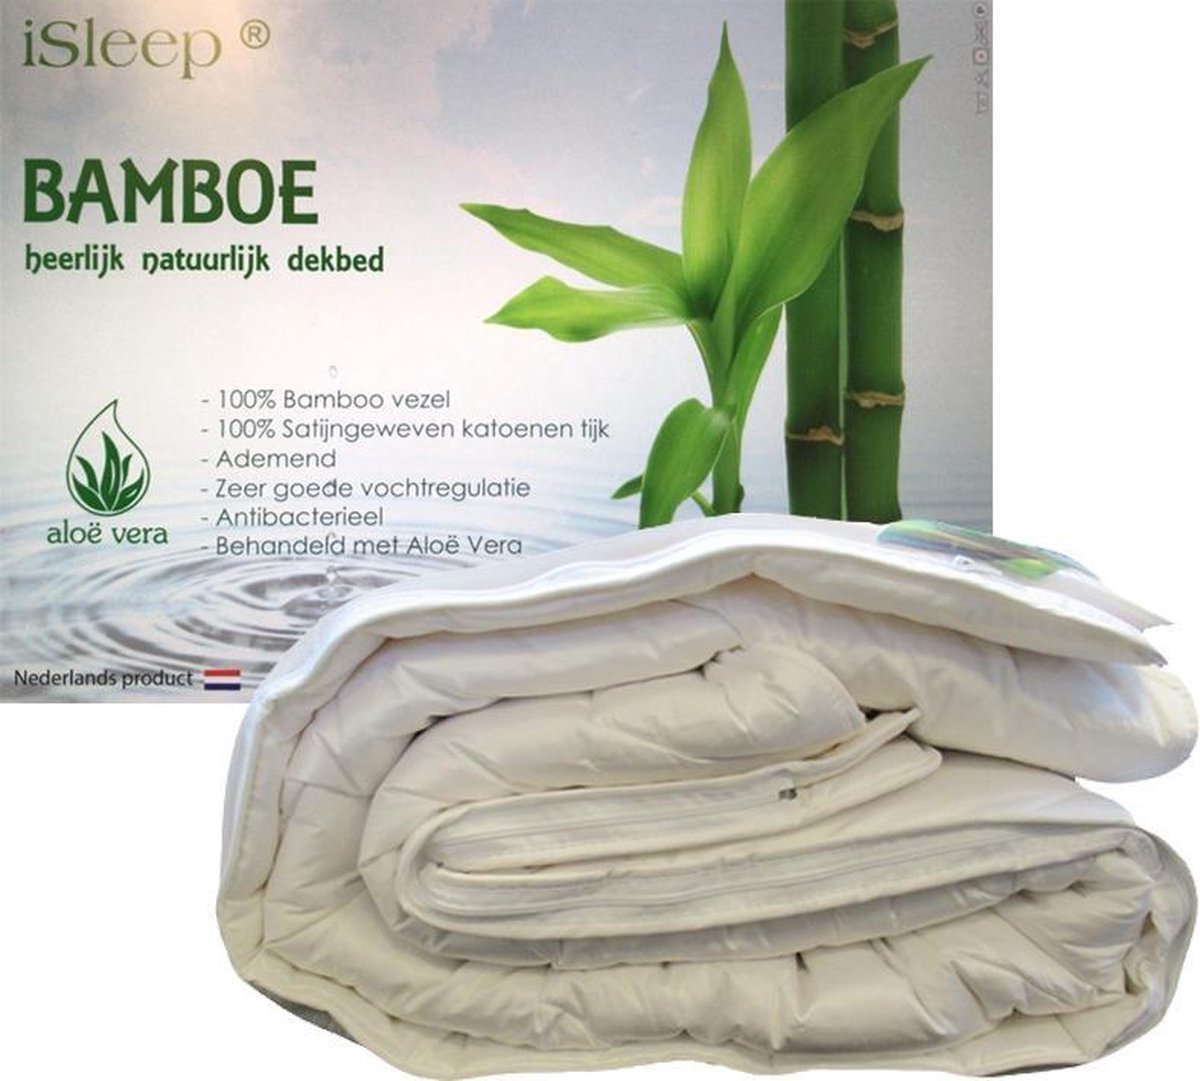 Opa Mainstream Groene achtergrond iSleep Bamboo DeLuxe 4-Seizoenen Dekbed - 100% Bamboe - Litsjumeaux -  240x220 cm | bol.com